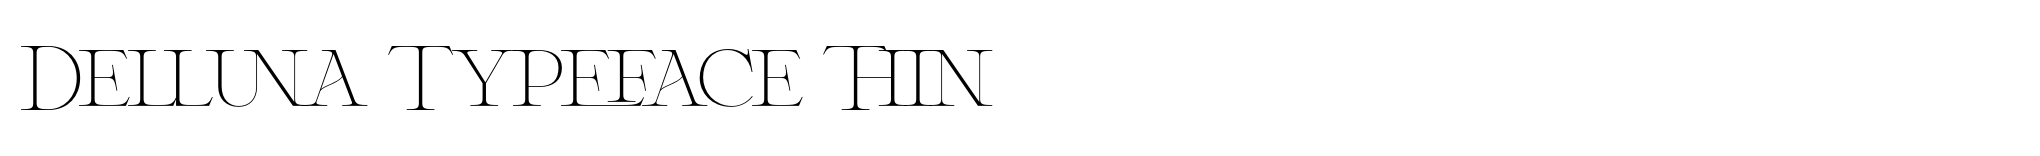 Delluna Typeface Thin image